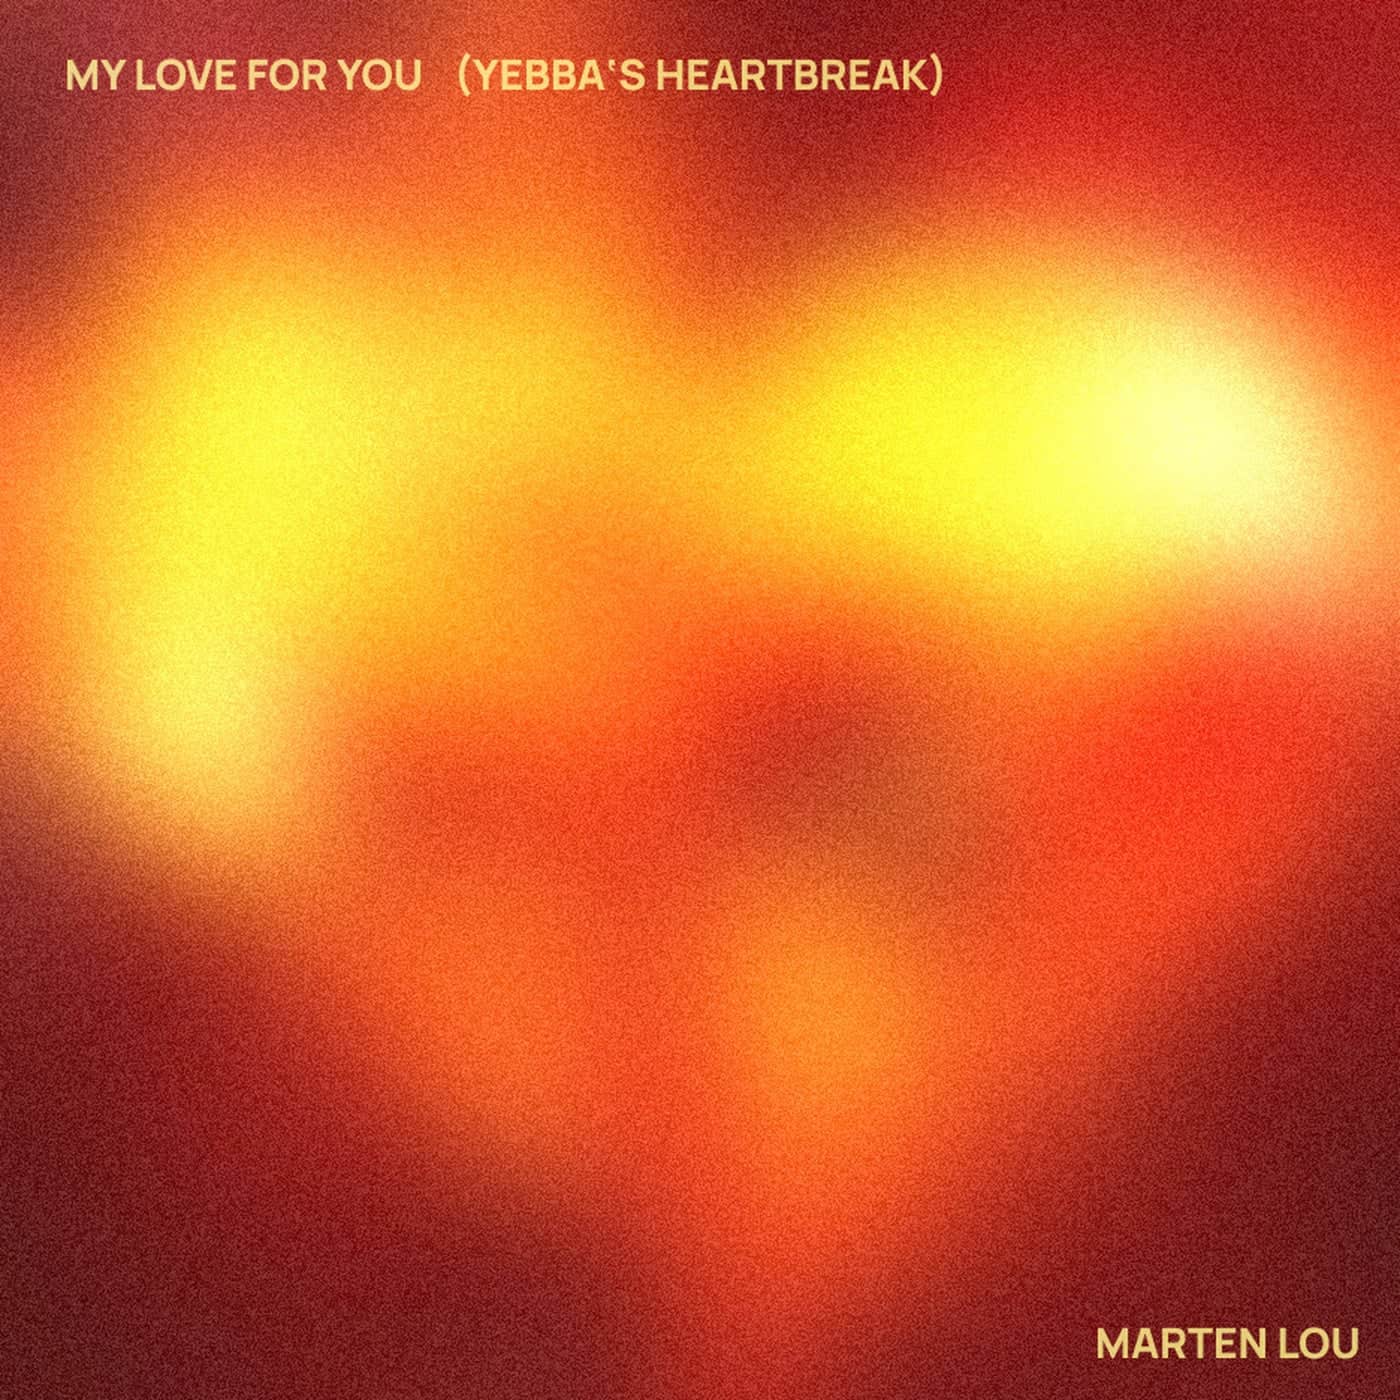 image cover: Marten Lou - My Love For You (Yebba's Heartbreak) / RLS00223952